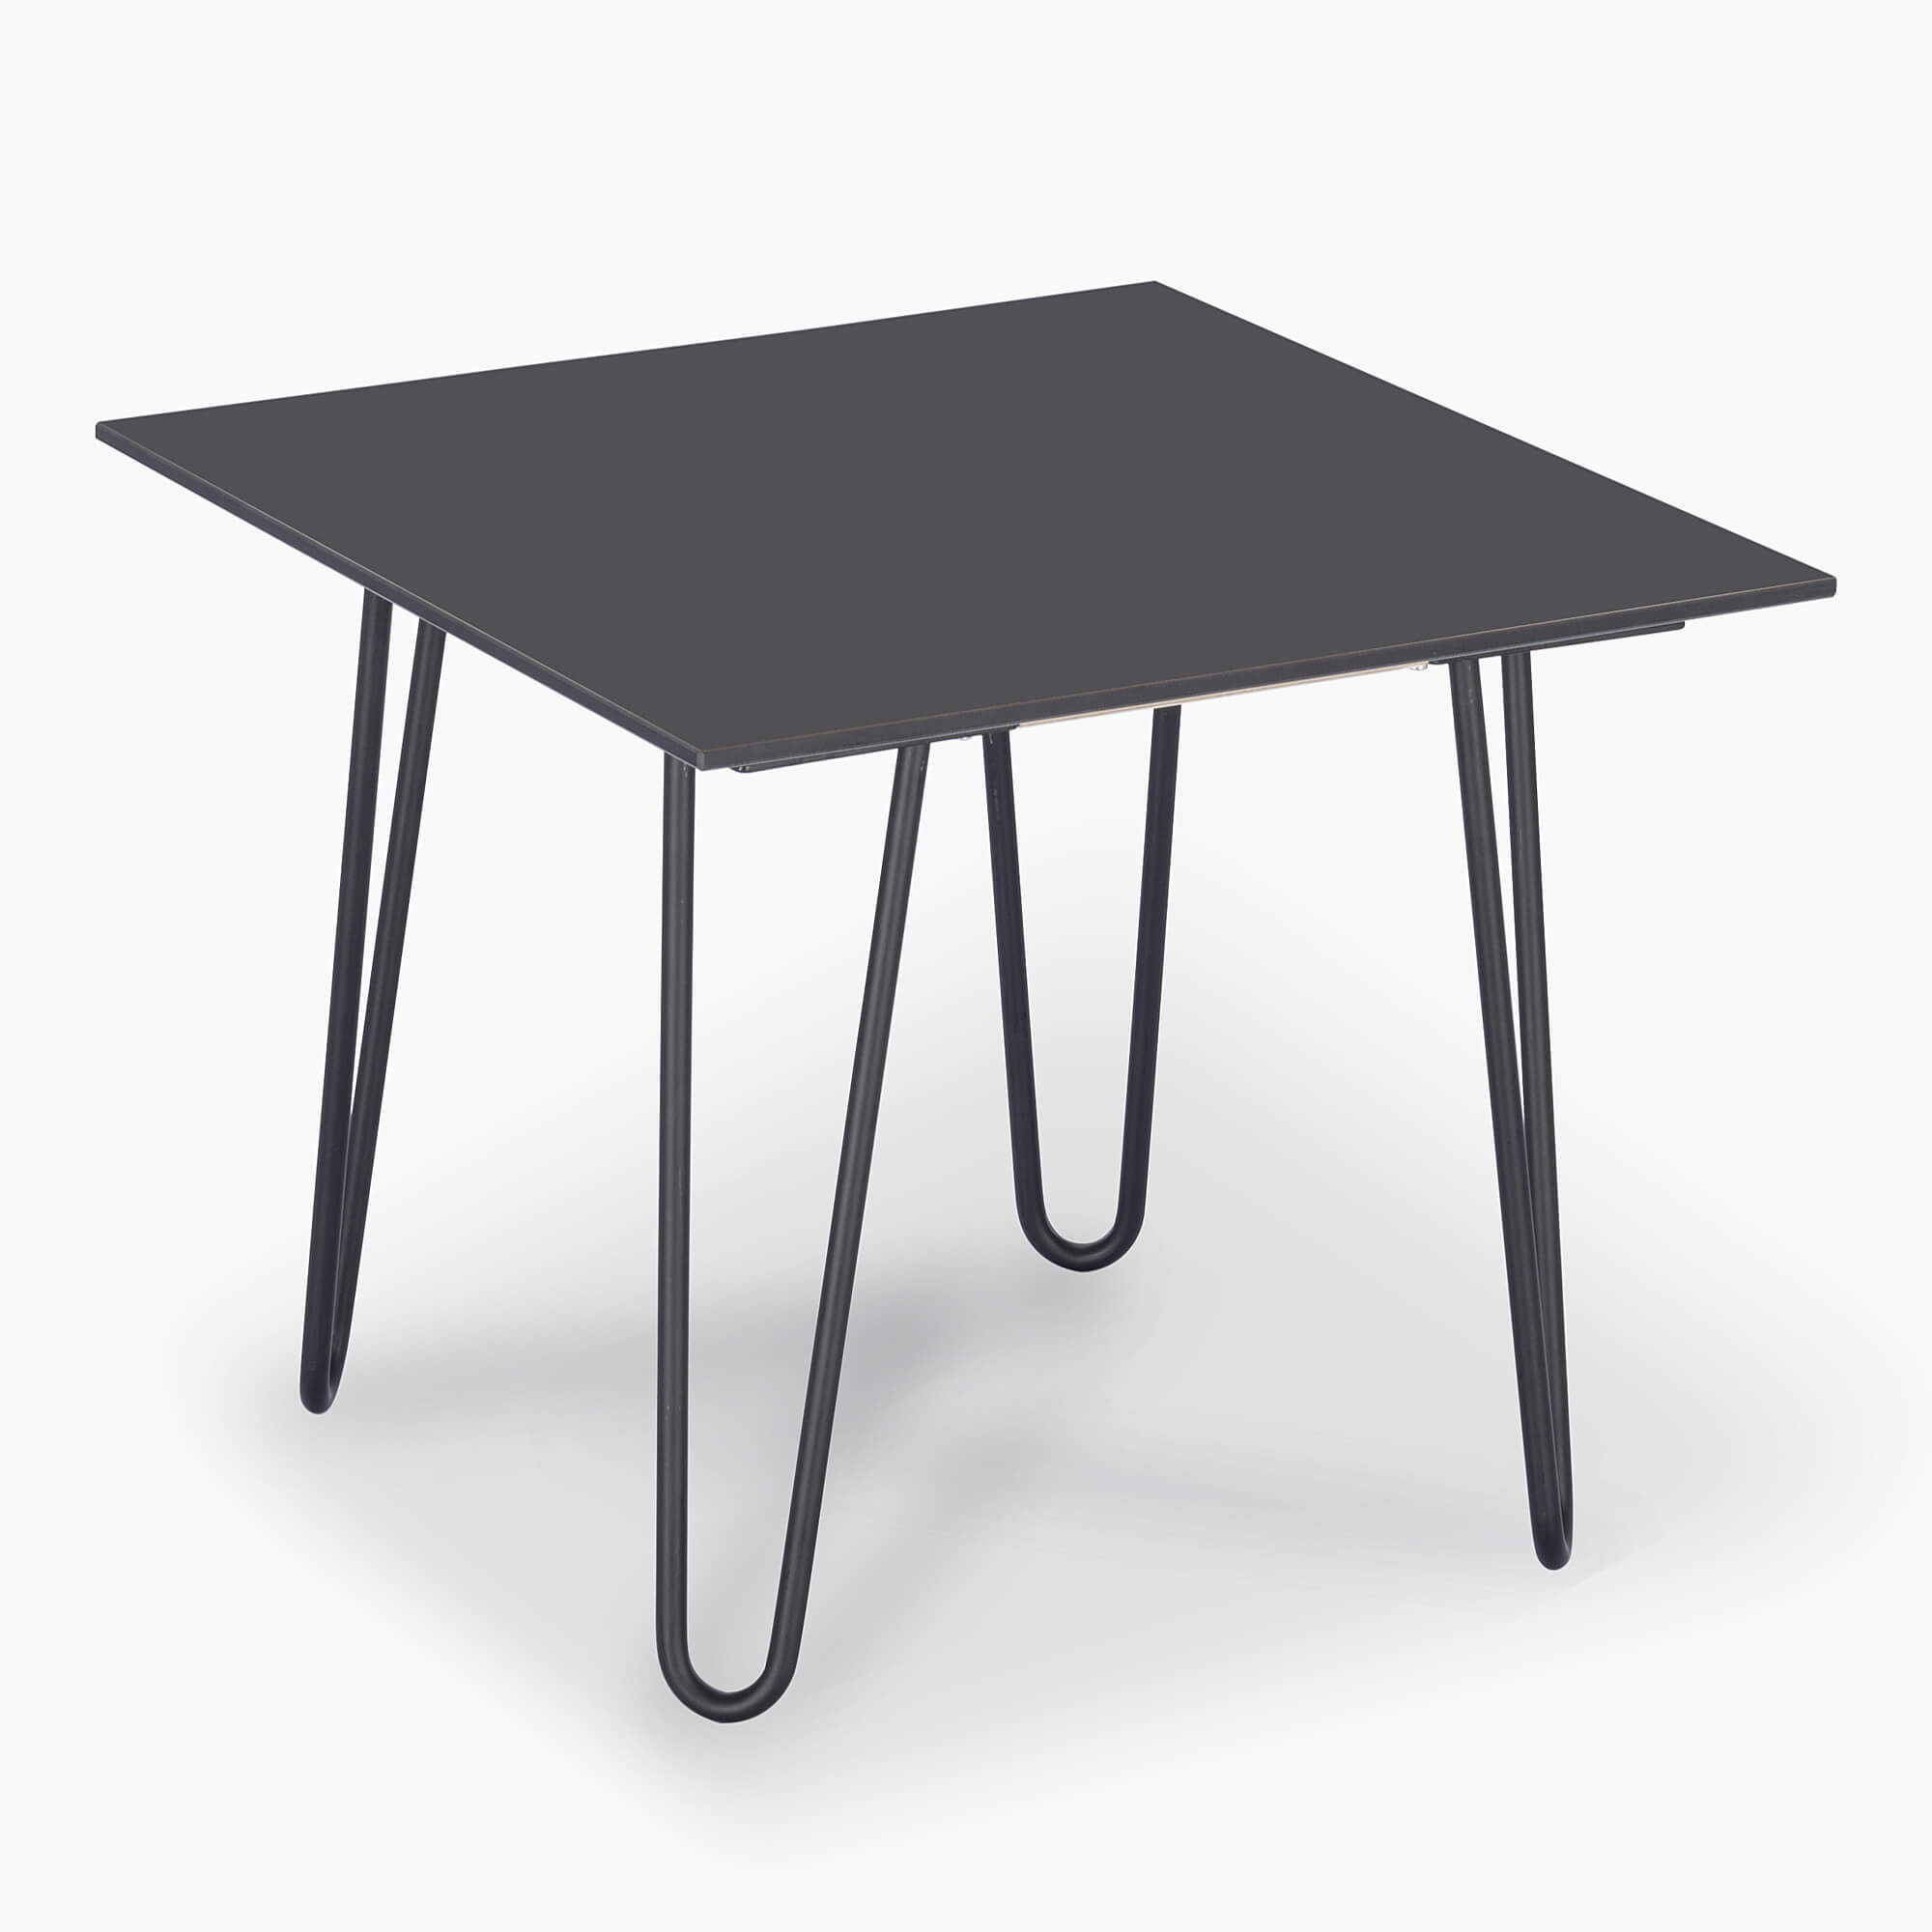 Small-square-side-table-50x50-cm-65x65-cm-janEven-CoasLine